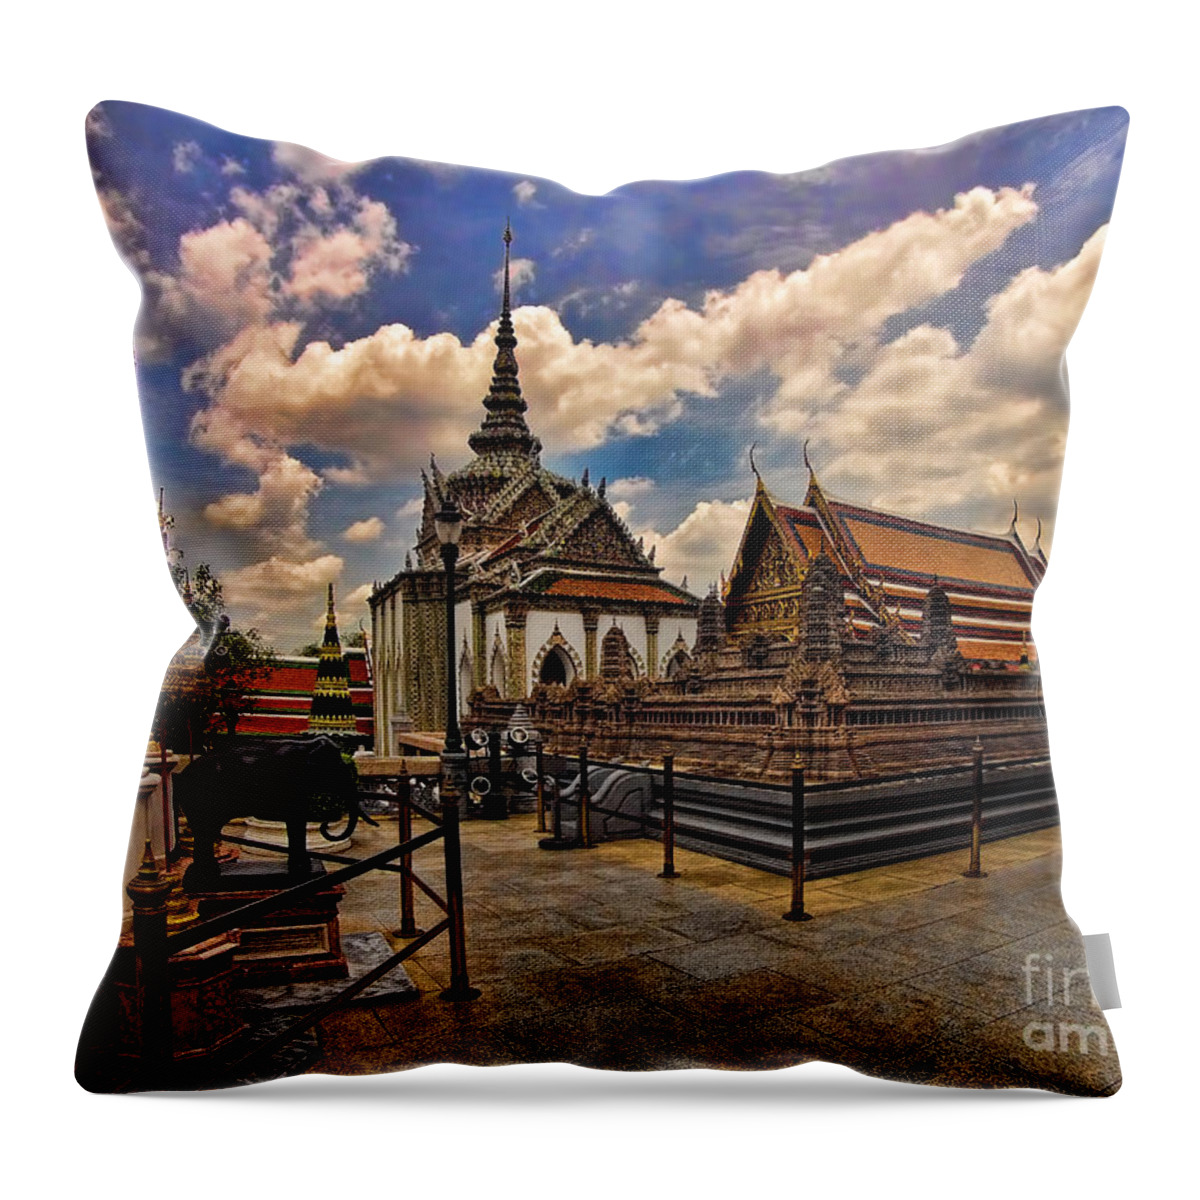 Asia Throw Pillow featuring the photograph Wat Phra Kaew #1 by Joerg Lingnau